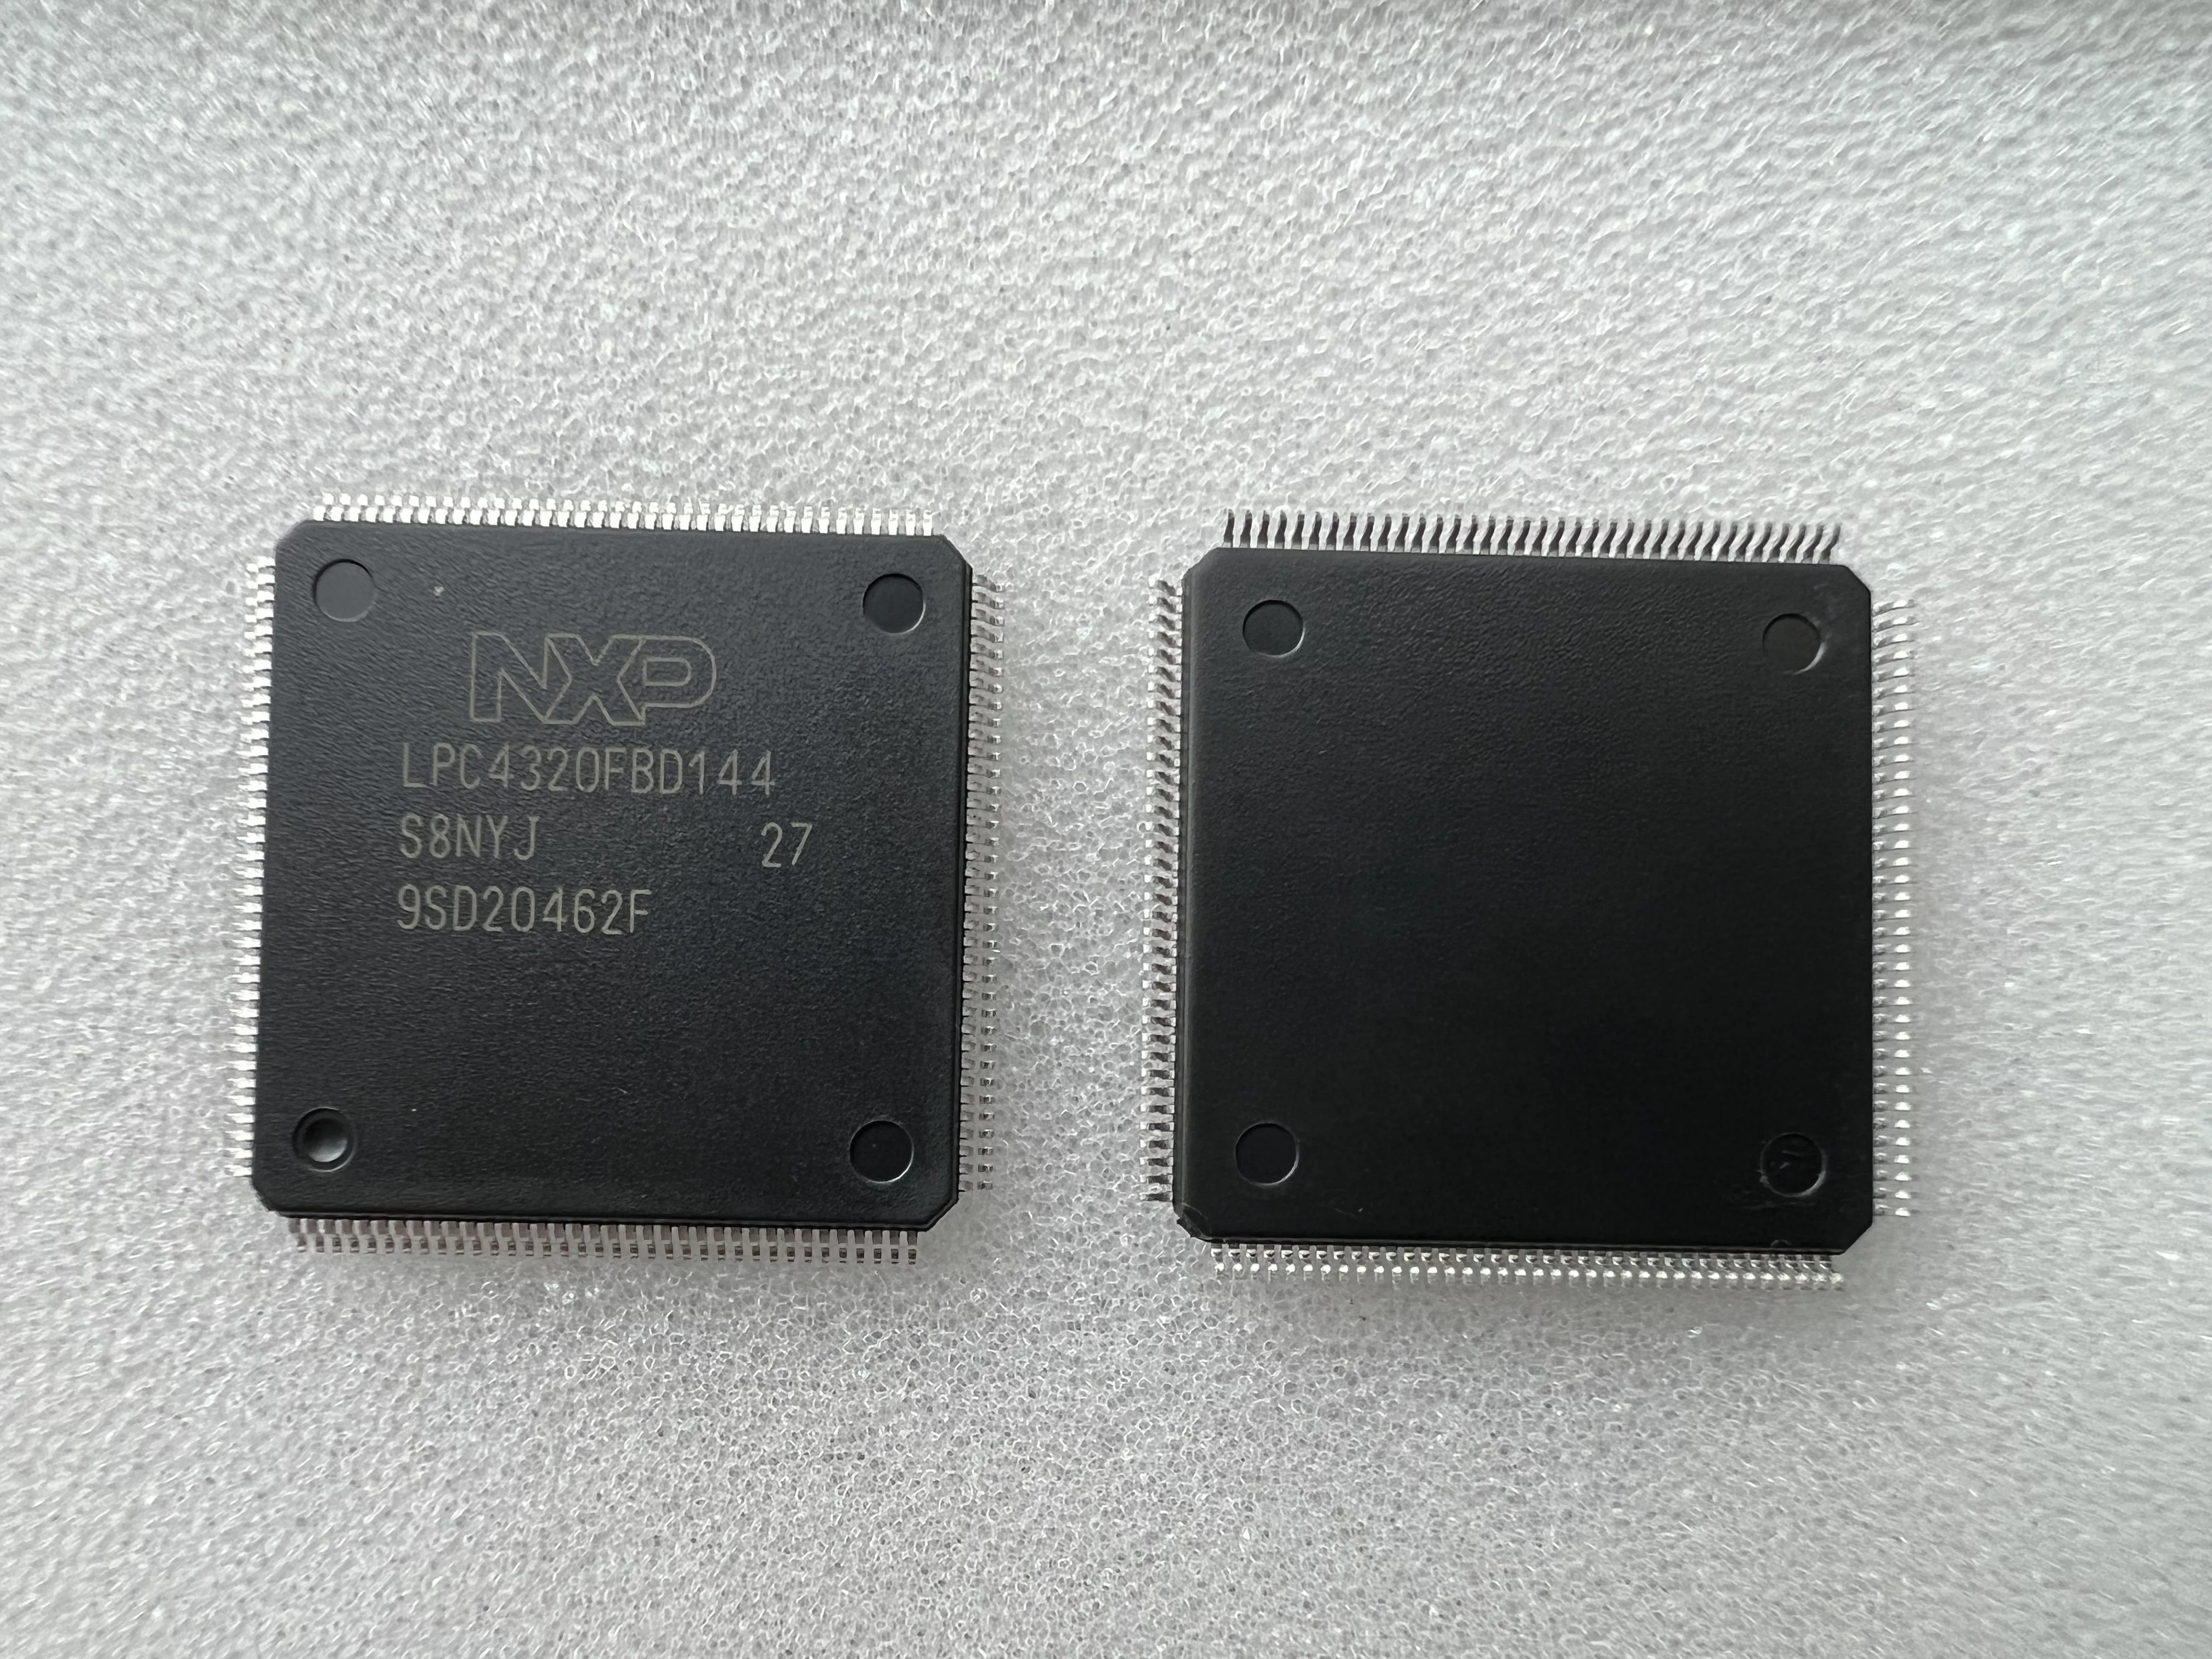 100% LPC4320FBD144,551 Package LQFP-144 New Original Genuine Processor/microcontroller IC Chip